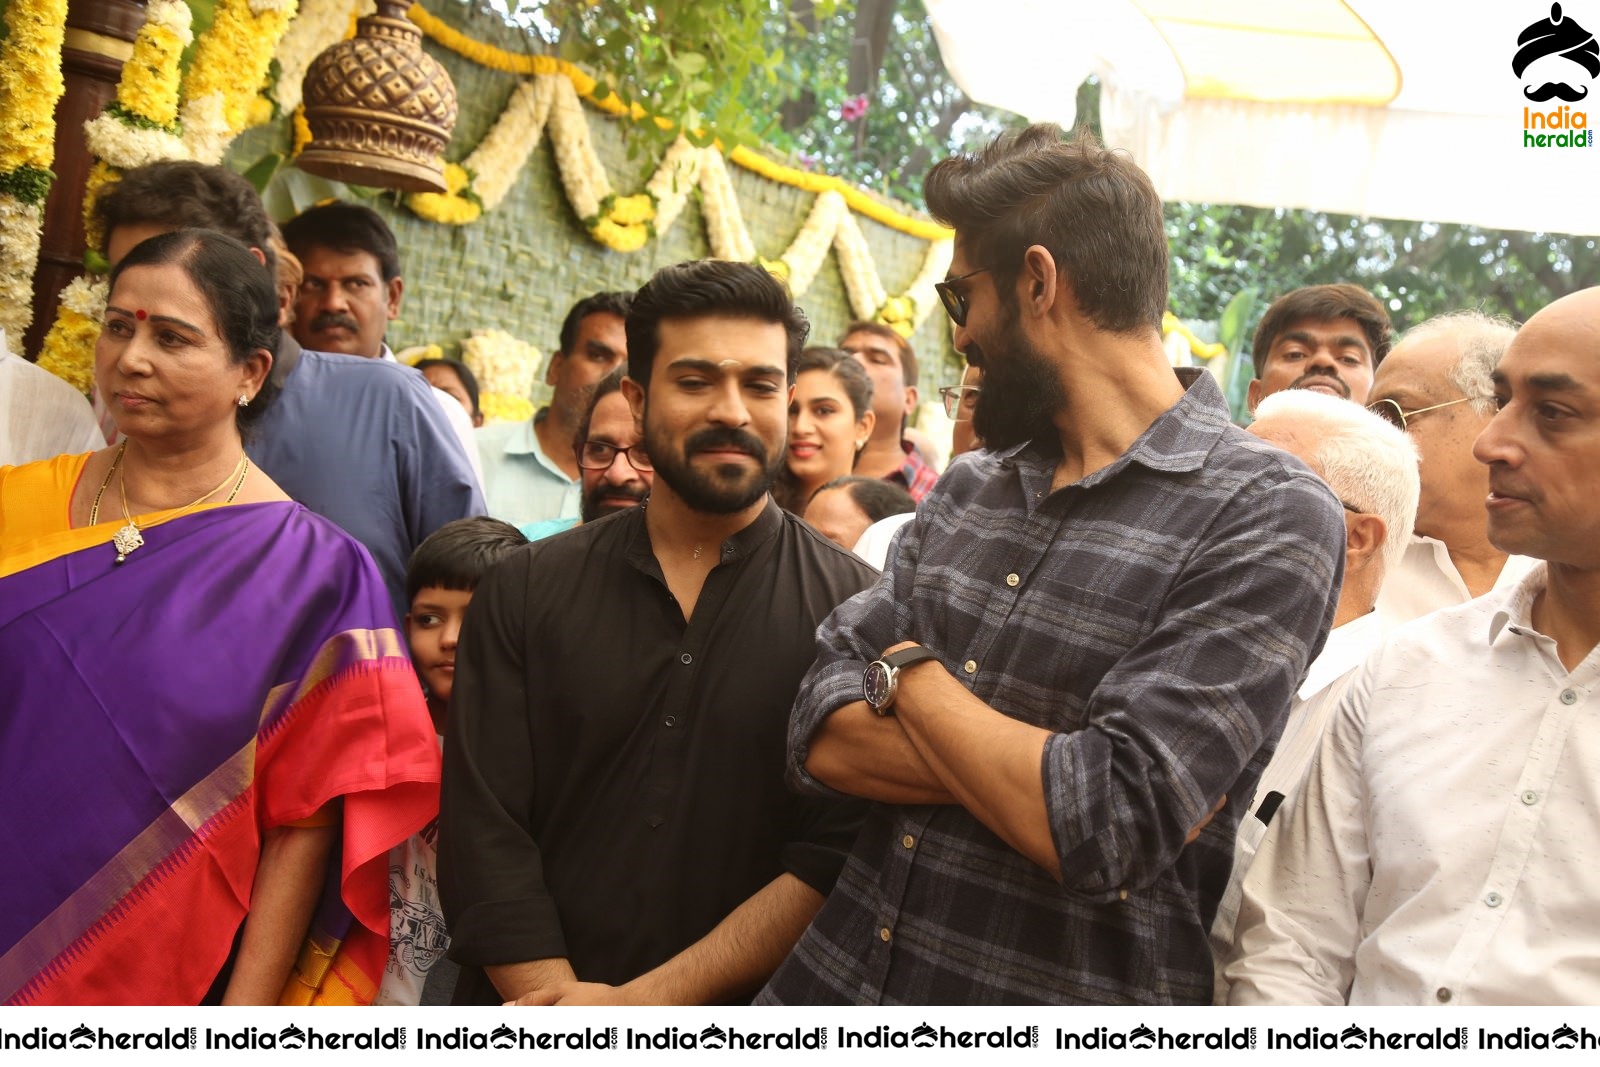 Actor Ram Charan and Rana Daggubati Spotted Together with Beard Looks Set 2